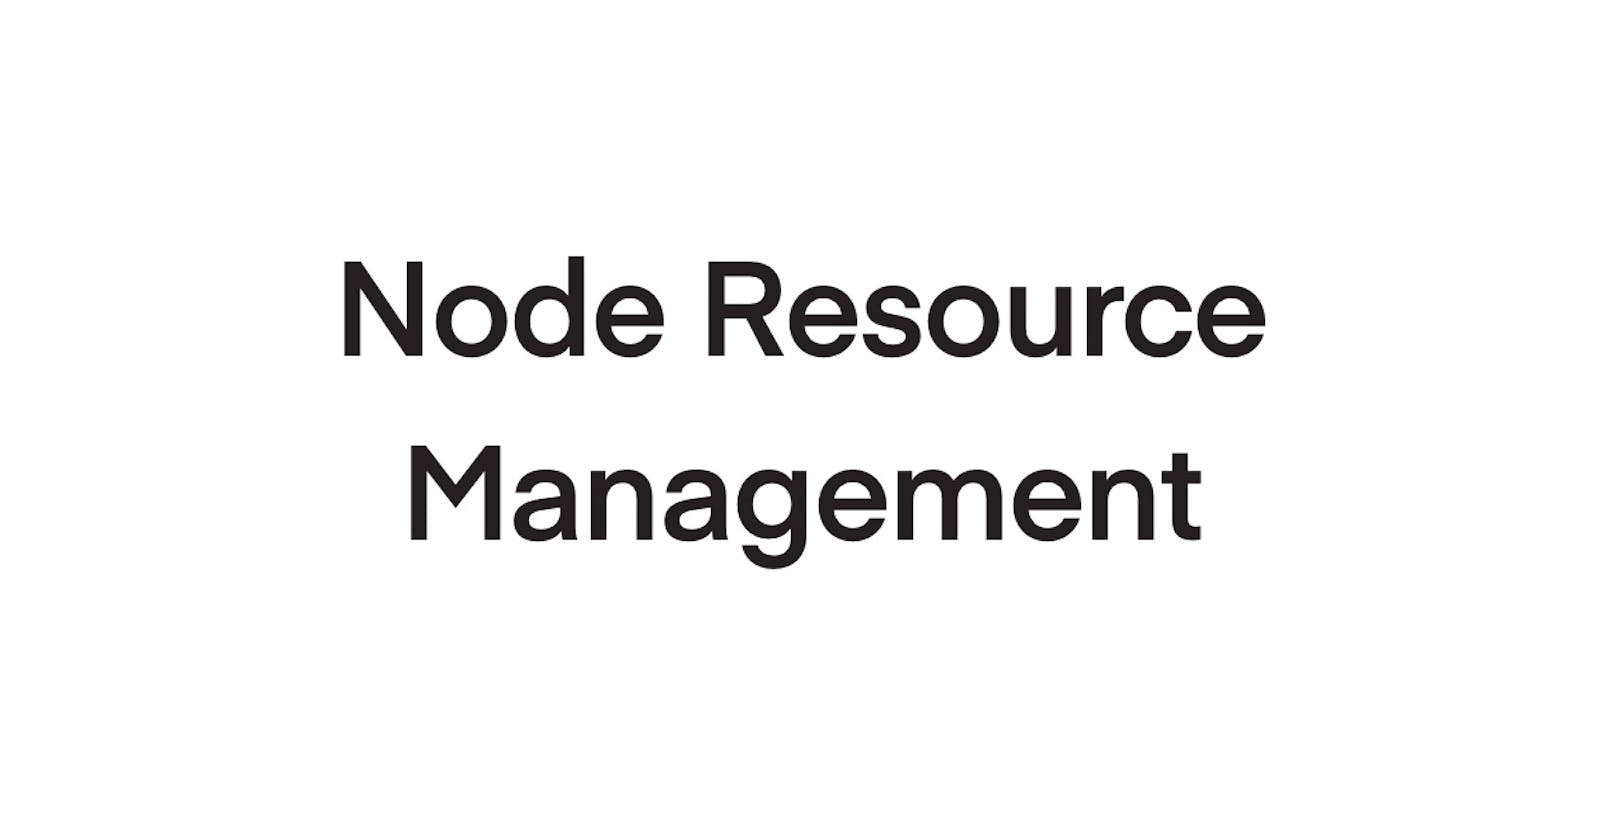 Node Resource Management